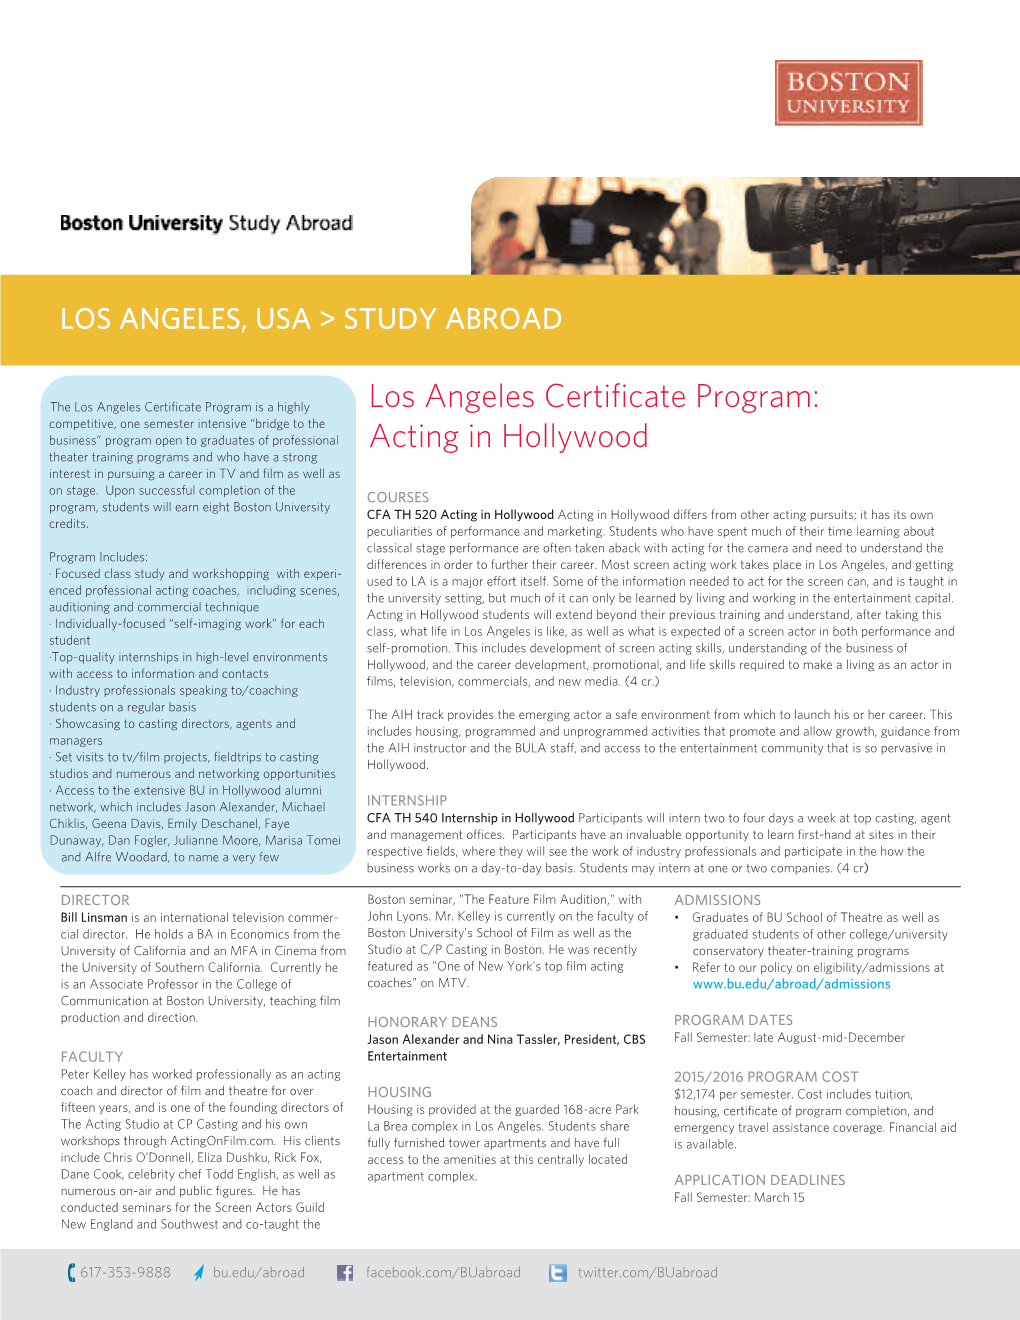 Los Angeles Certificate Program: Acting in Hollywood